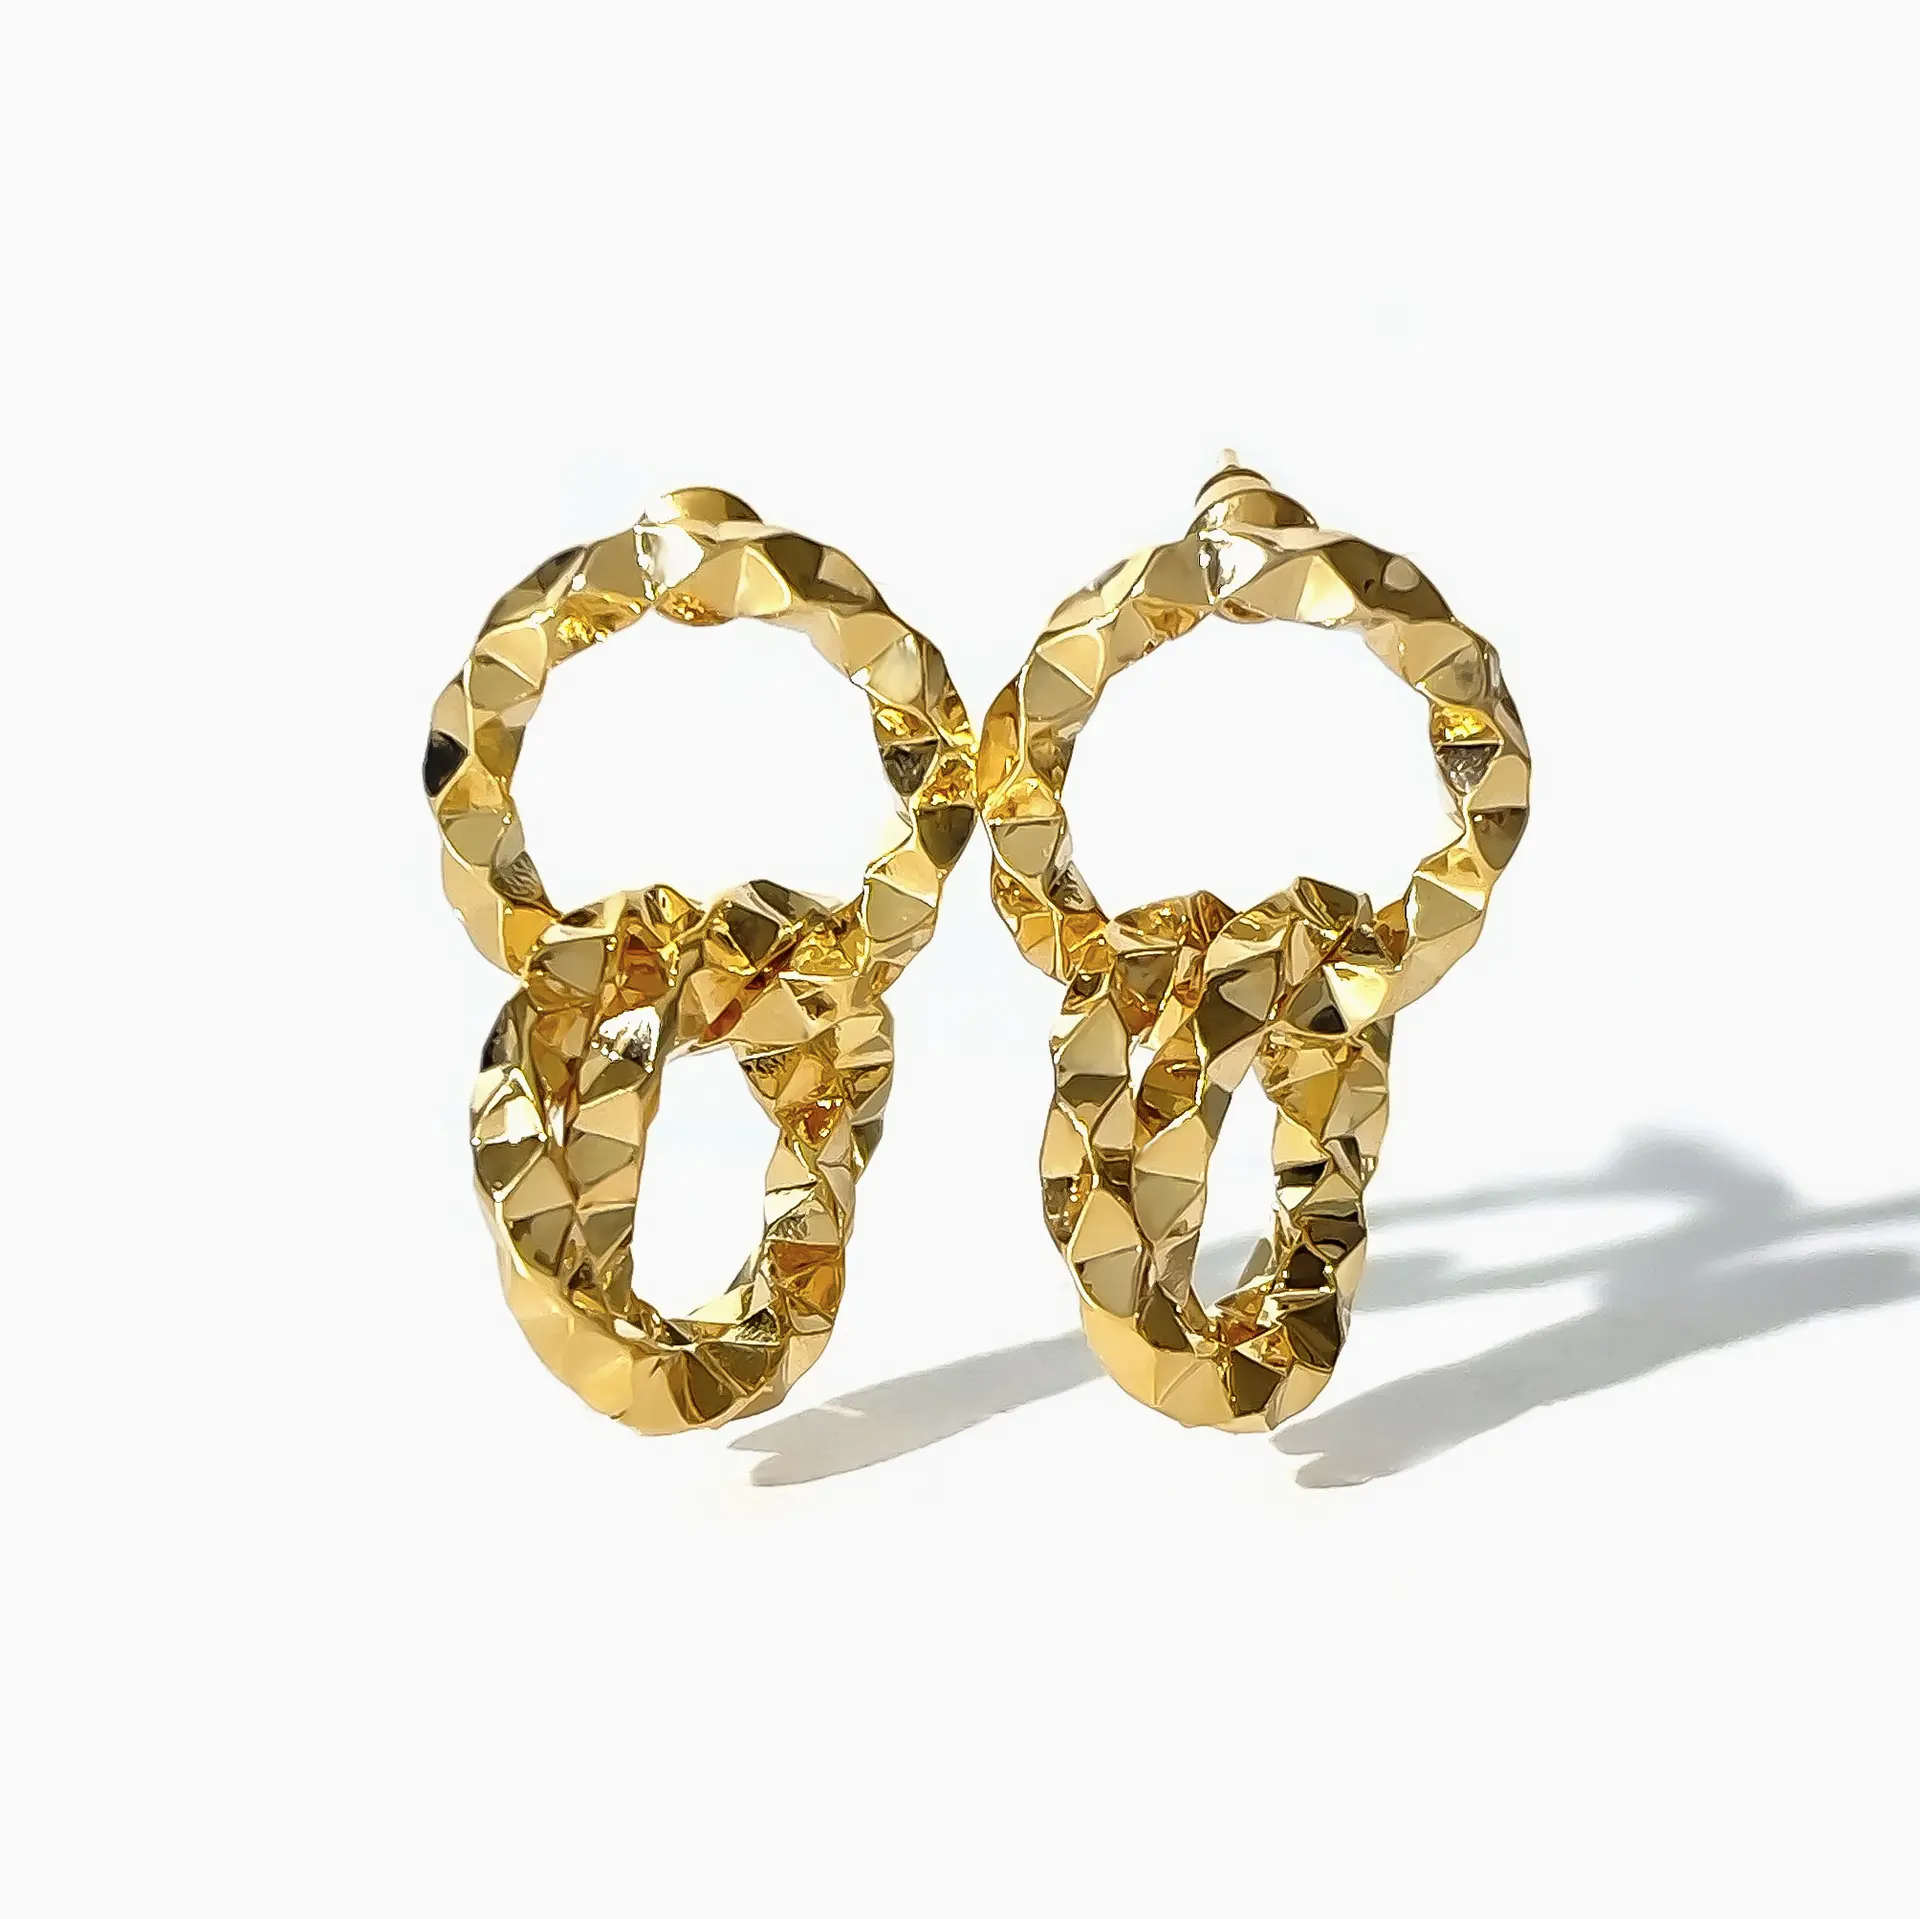 Jachon New sample style versatile earrings 14k gold plated copper earrings Geometric circle fashion drop earrings